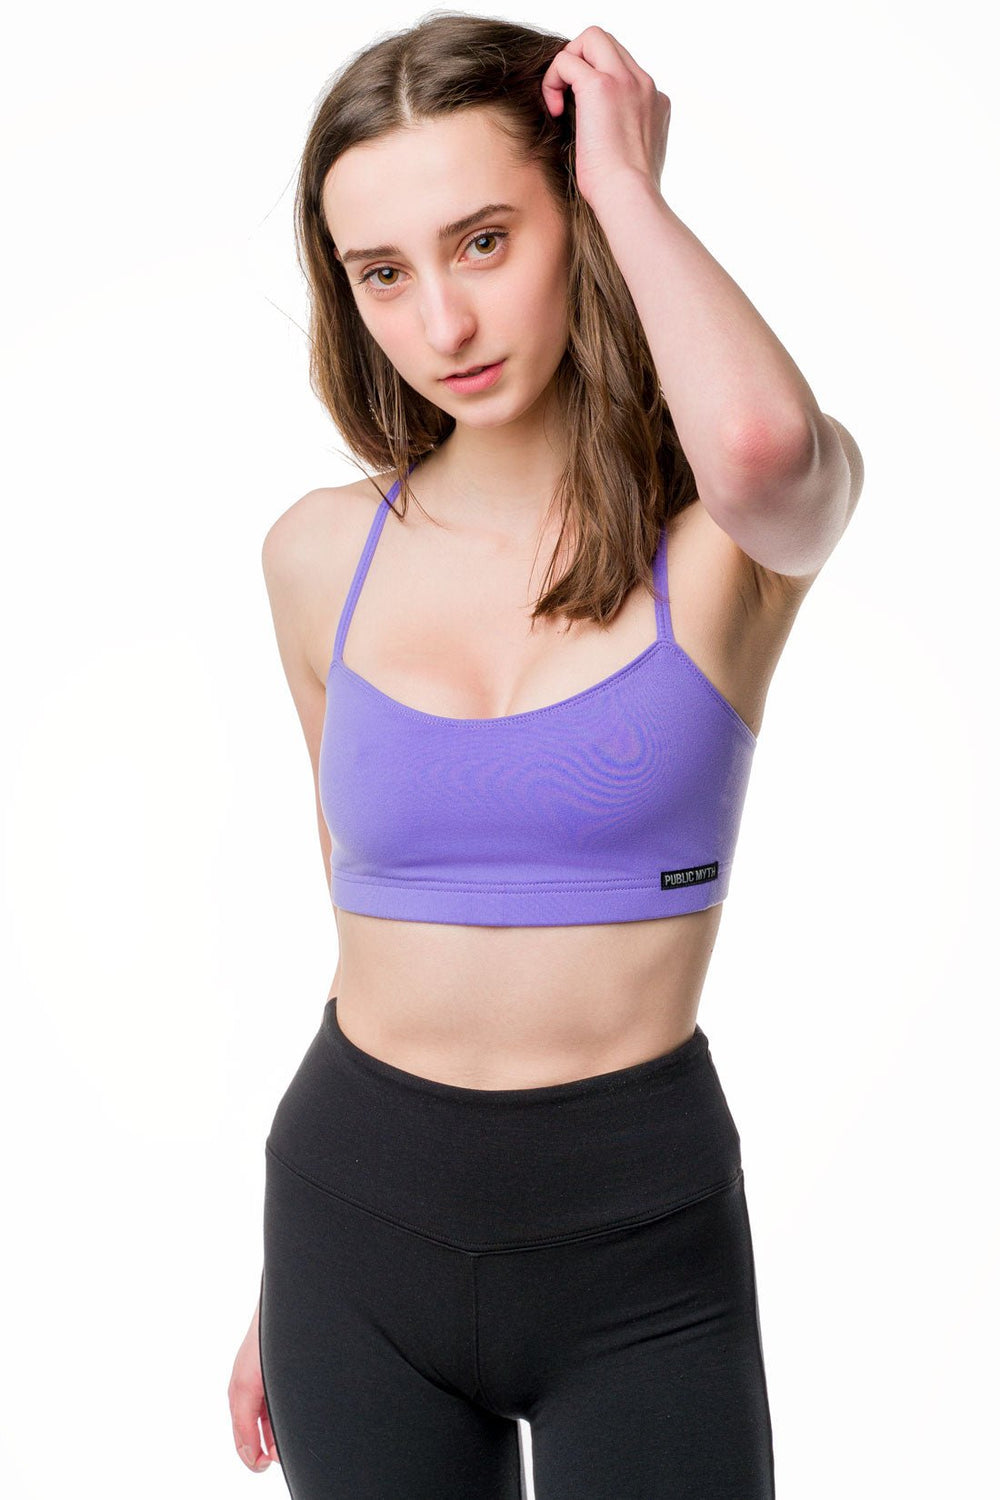 Strappy sports bra in purple